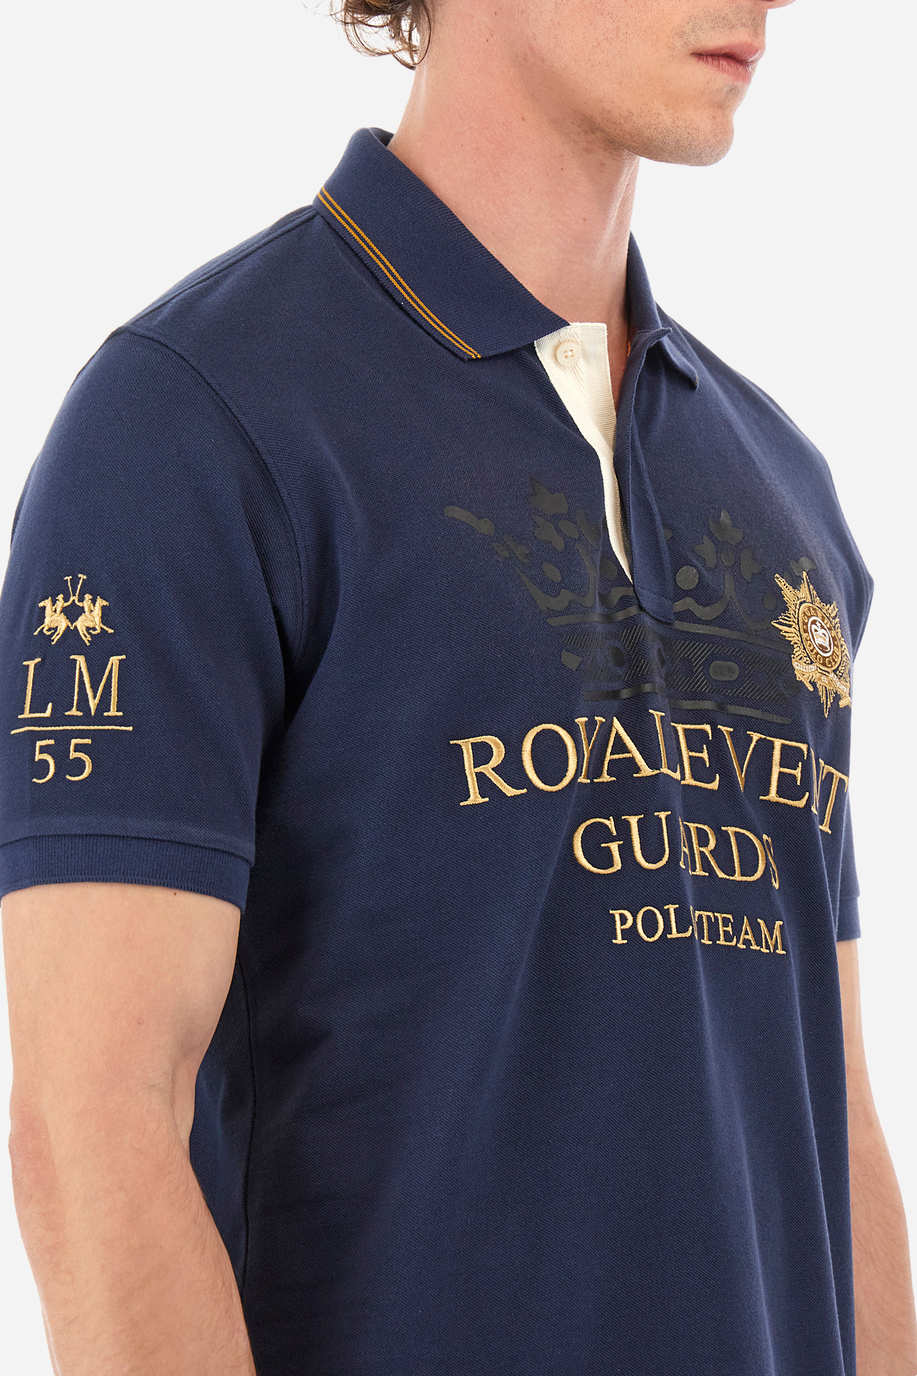 Polo coupe classique en coton - Yonas - Guards - England | La Martina - Official Online Shop